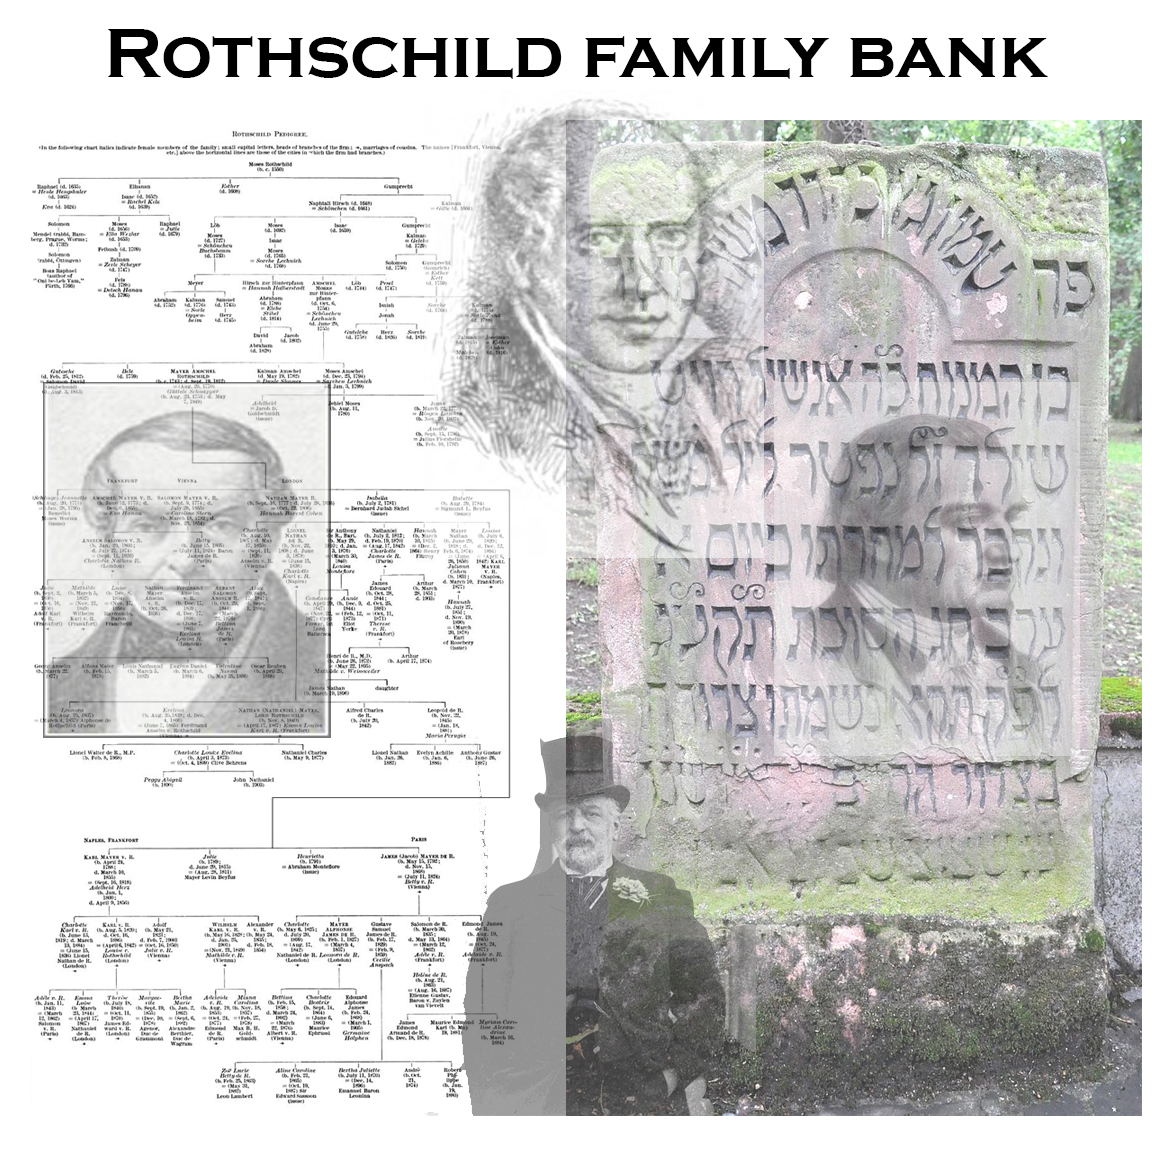 Rothschild Family Bank - Banking Secrets